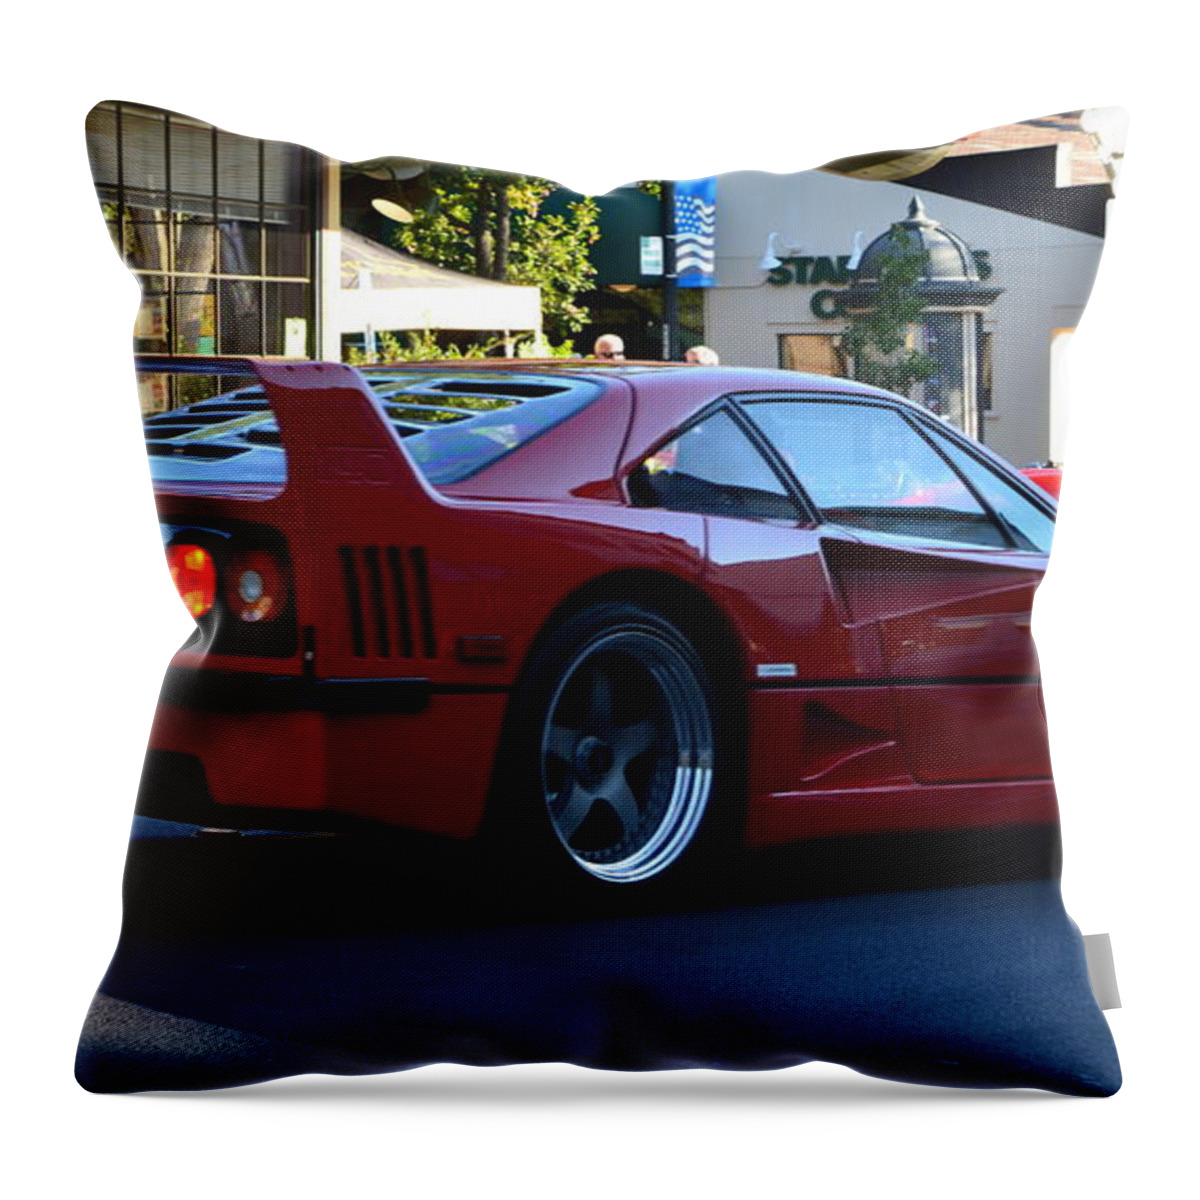  Throw Pillow featuring the photograph Ferrari F40 by Dean Ferreira